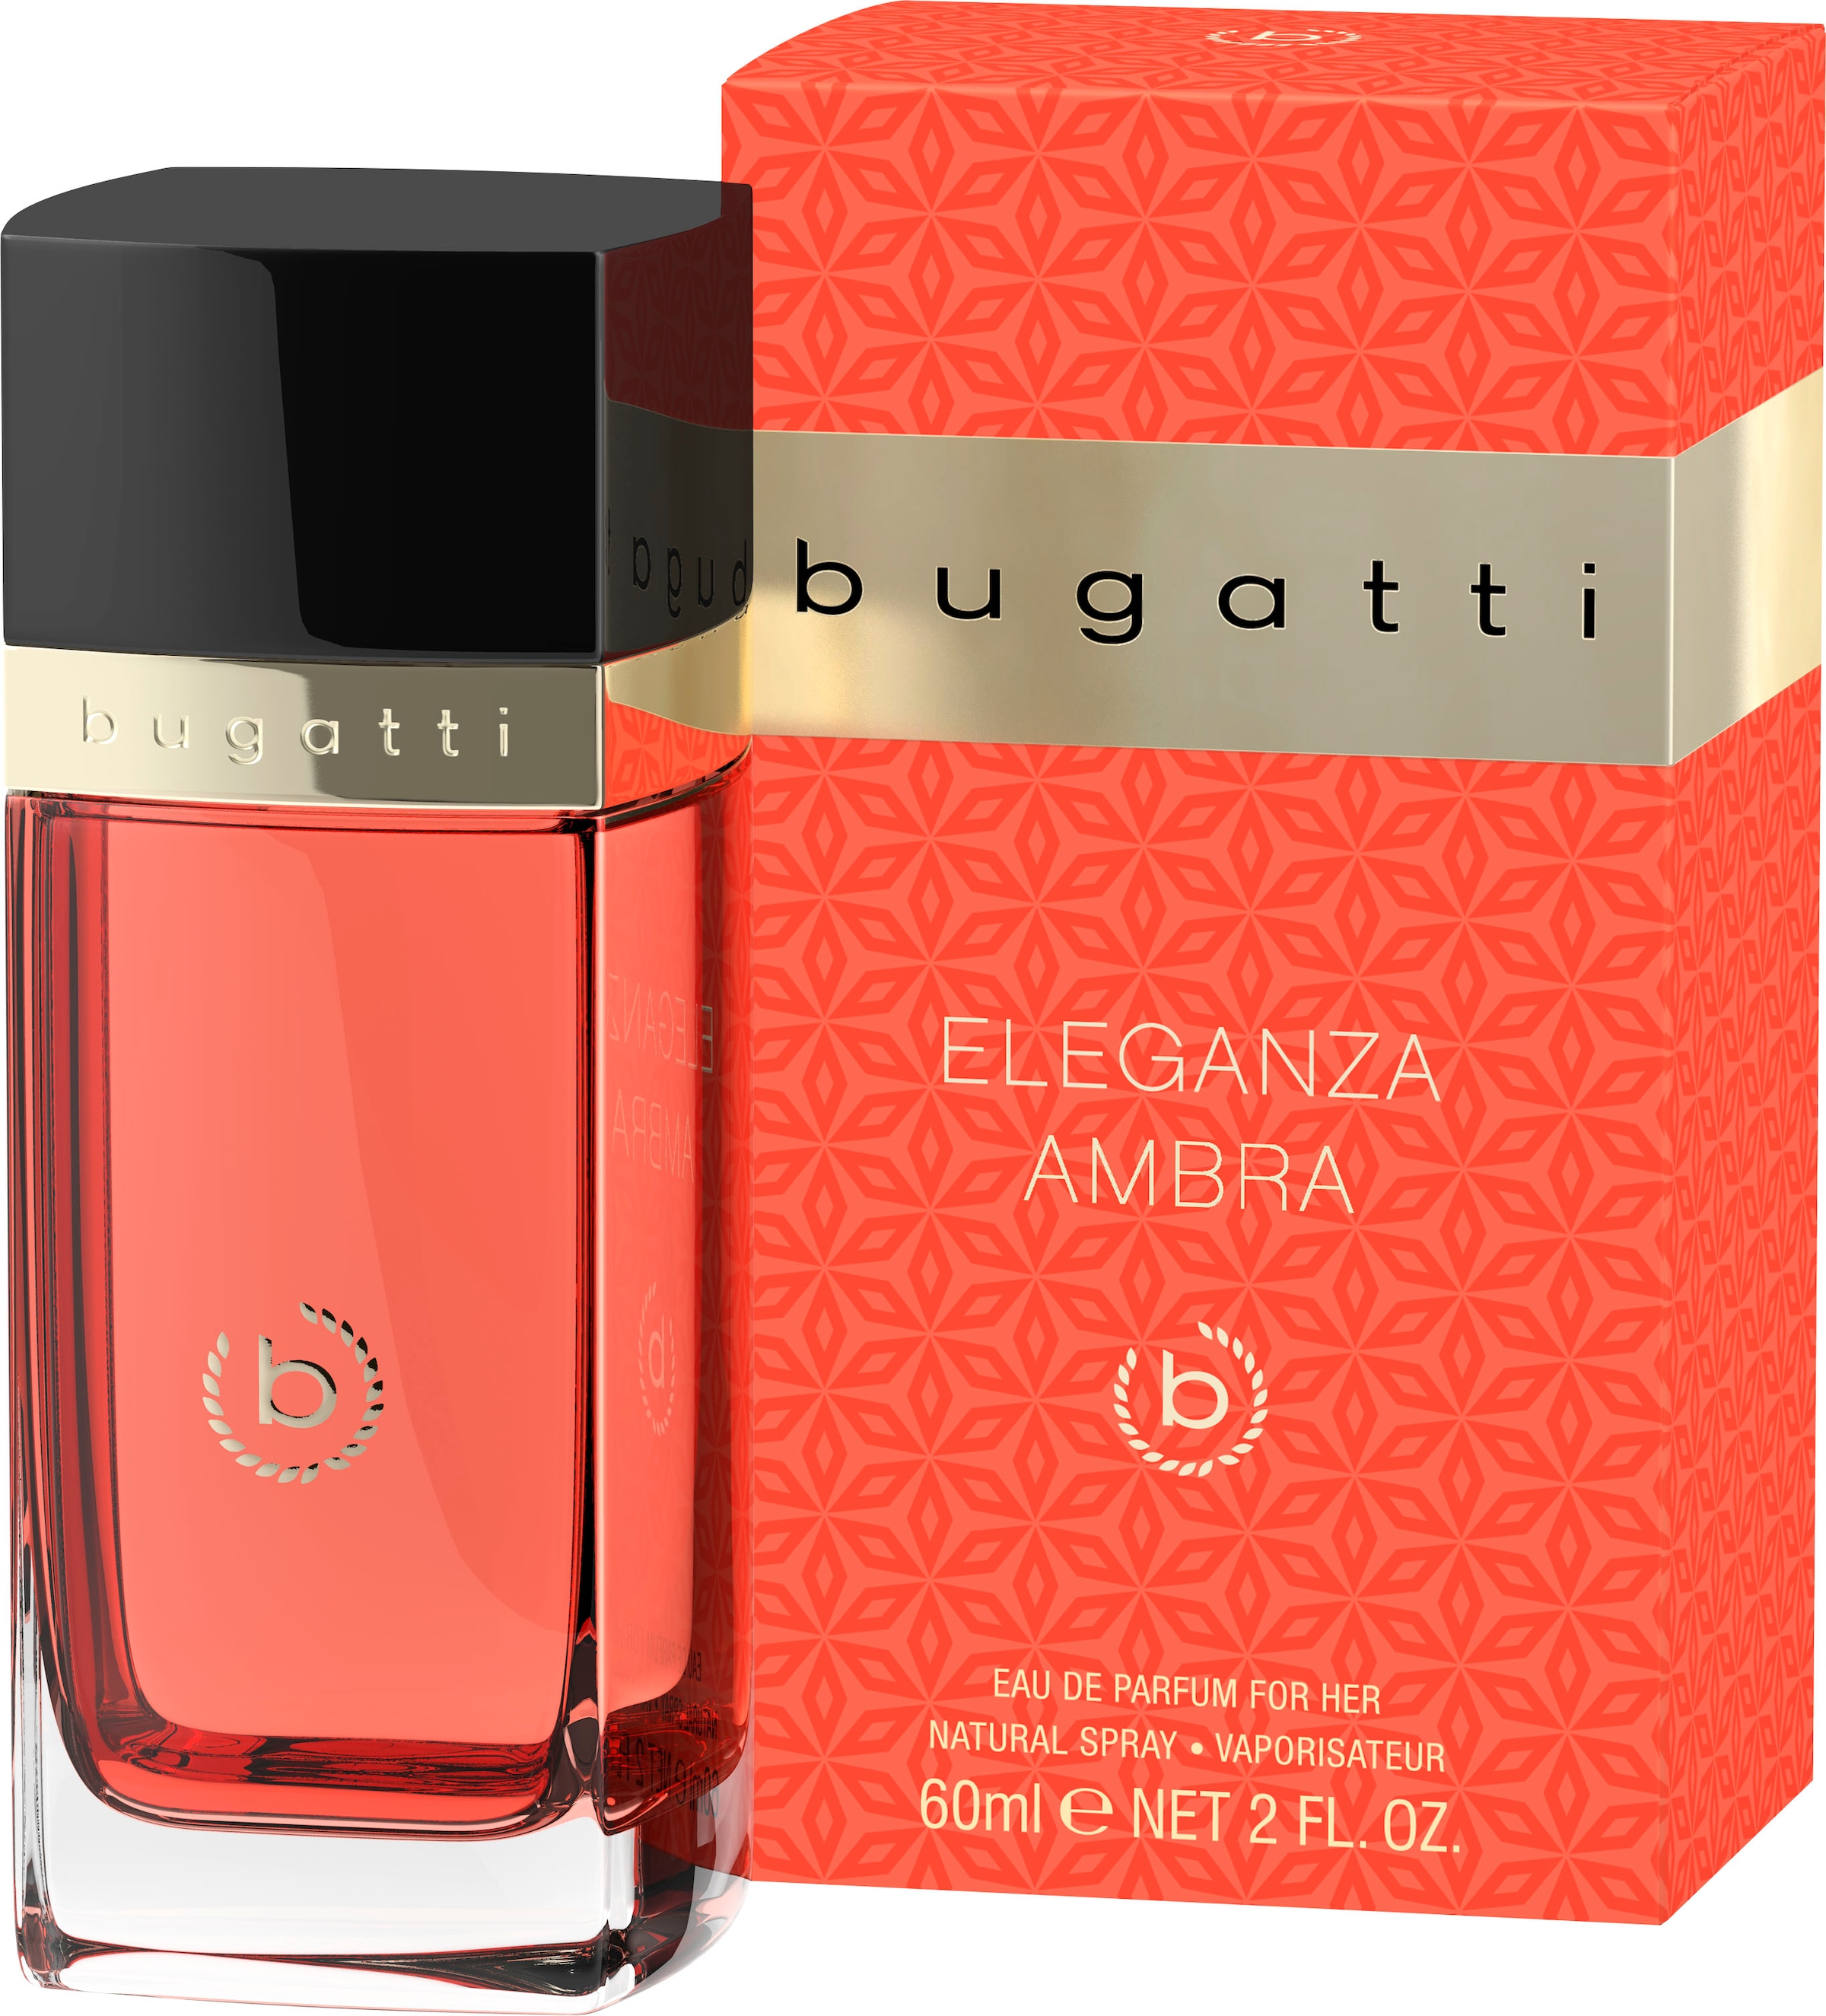 bugatti Eau Ambra ml« online bei »BUGATTI EdP de 60 her Eleganza for UNIVERSAL Parfum